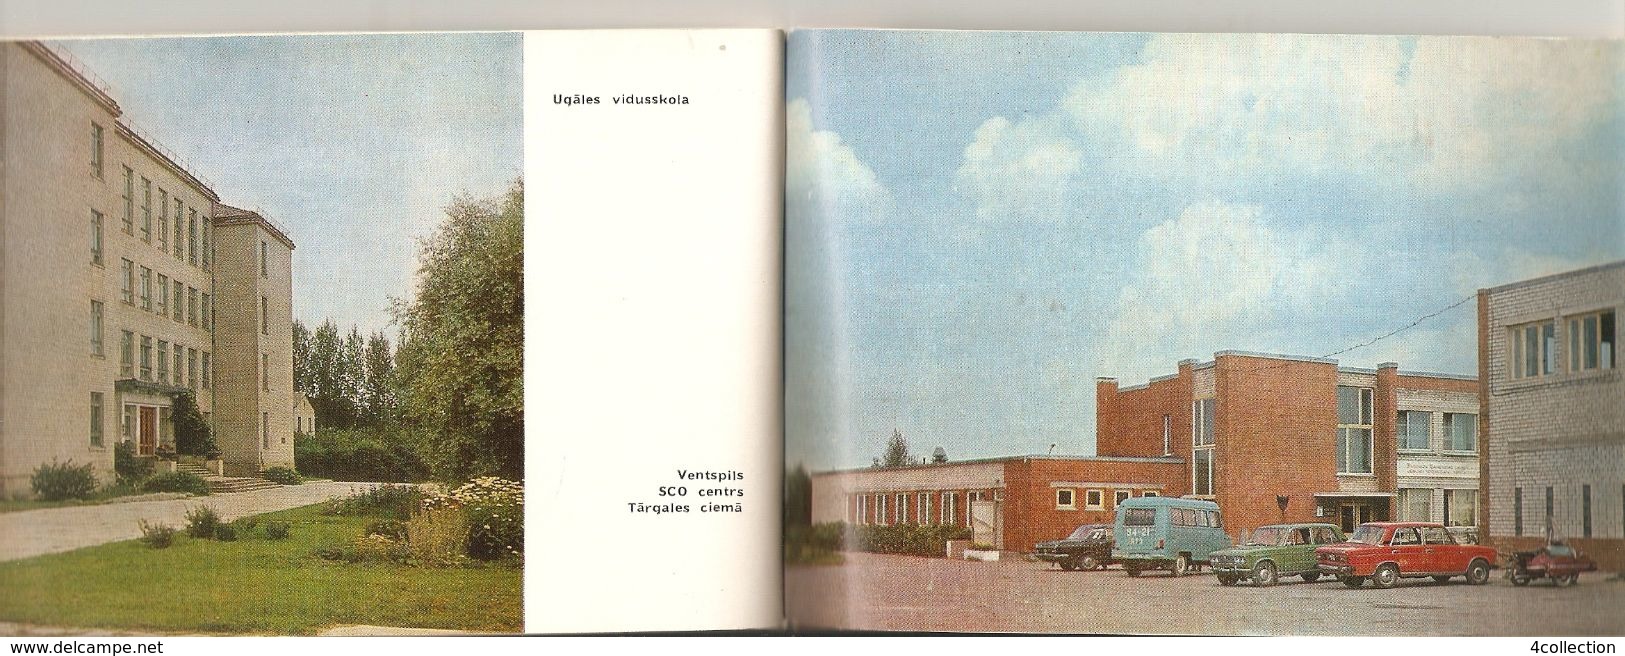 k2 Latvia Ventspils area region district USSR Soviet illustrated guidebook tourist book vintage travel guide Avots 1982